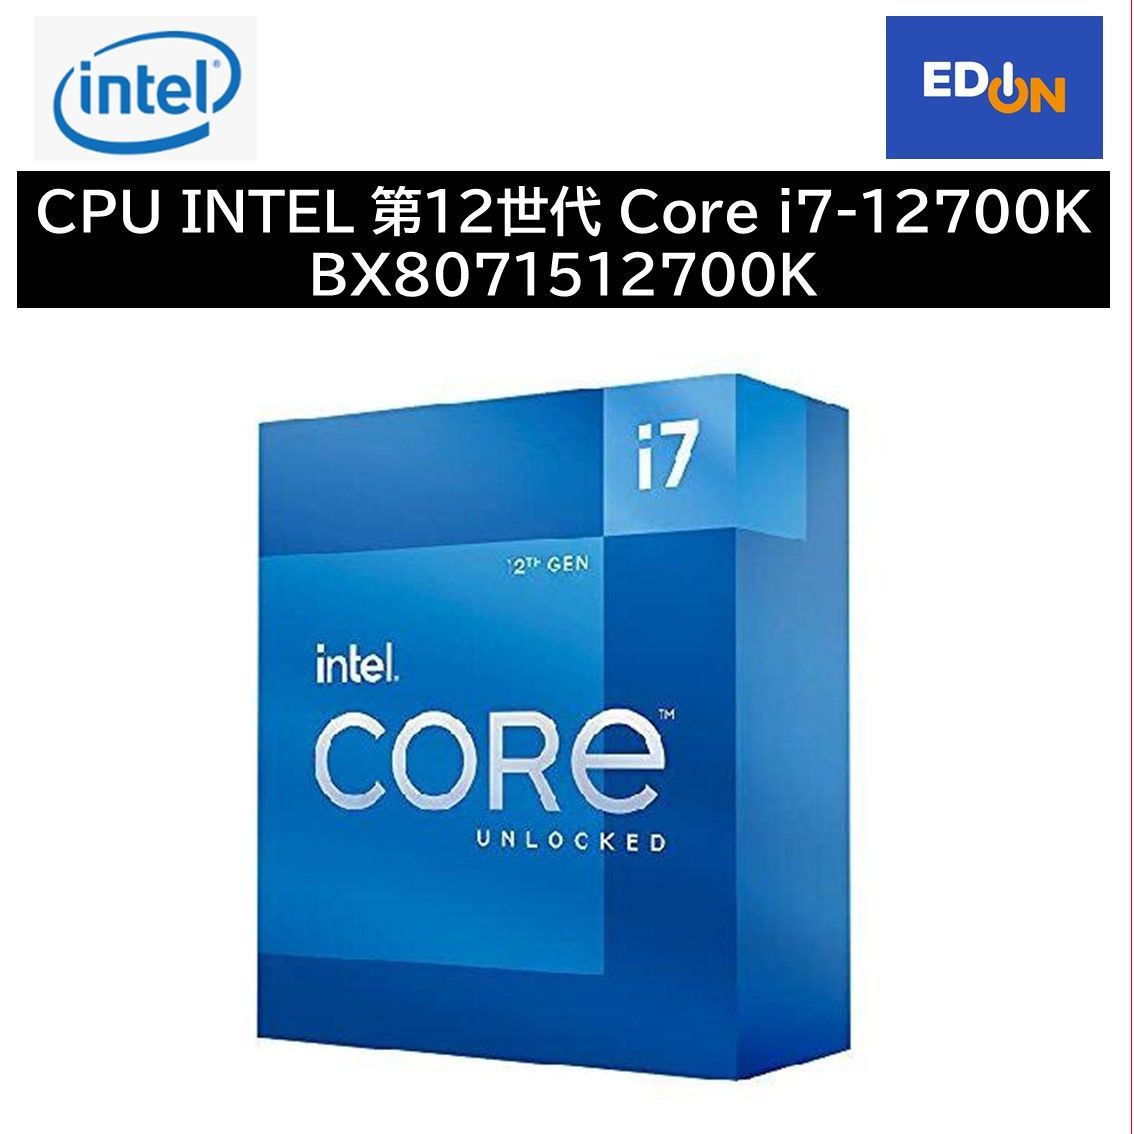 【11917】CPU INTEL 第12世代 Core i7-12700K BX8071512700K